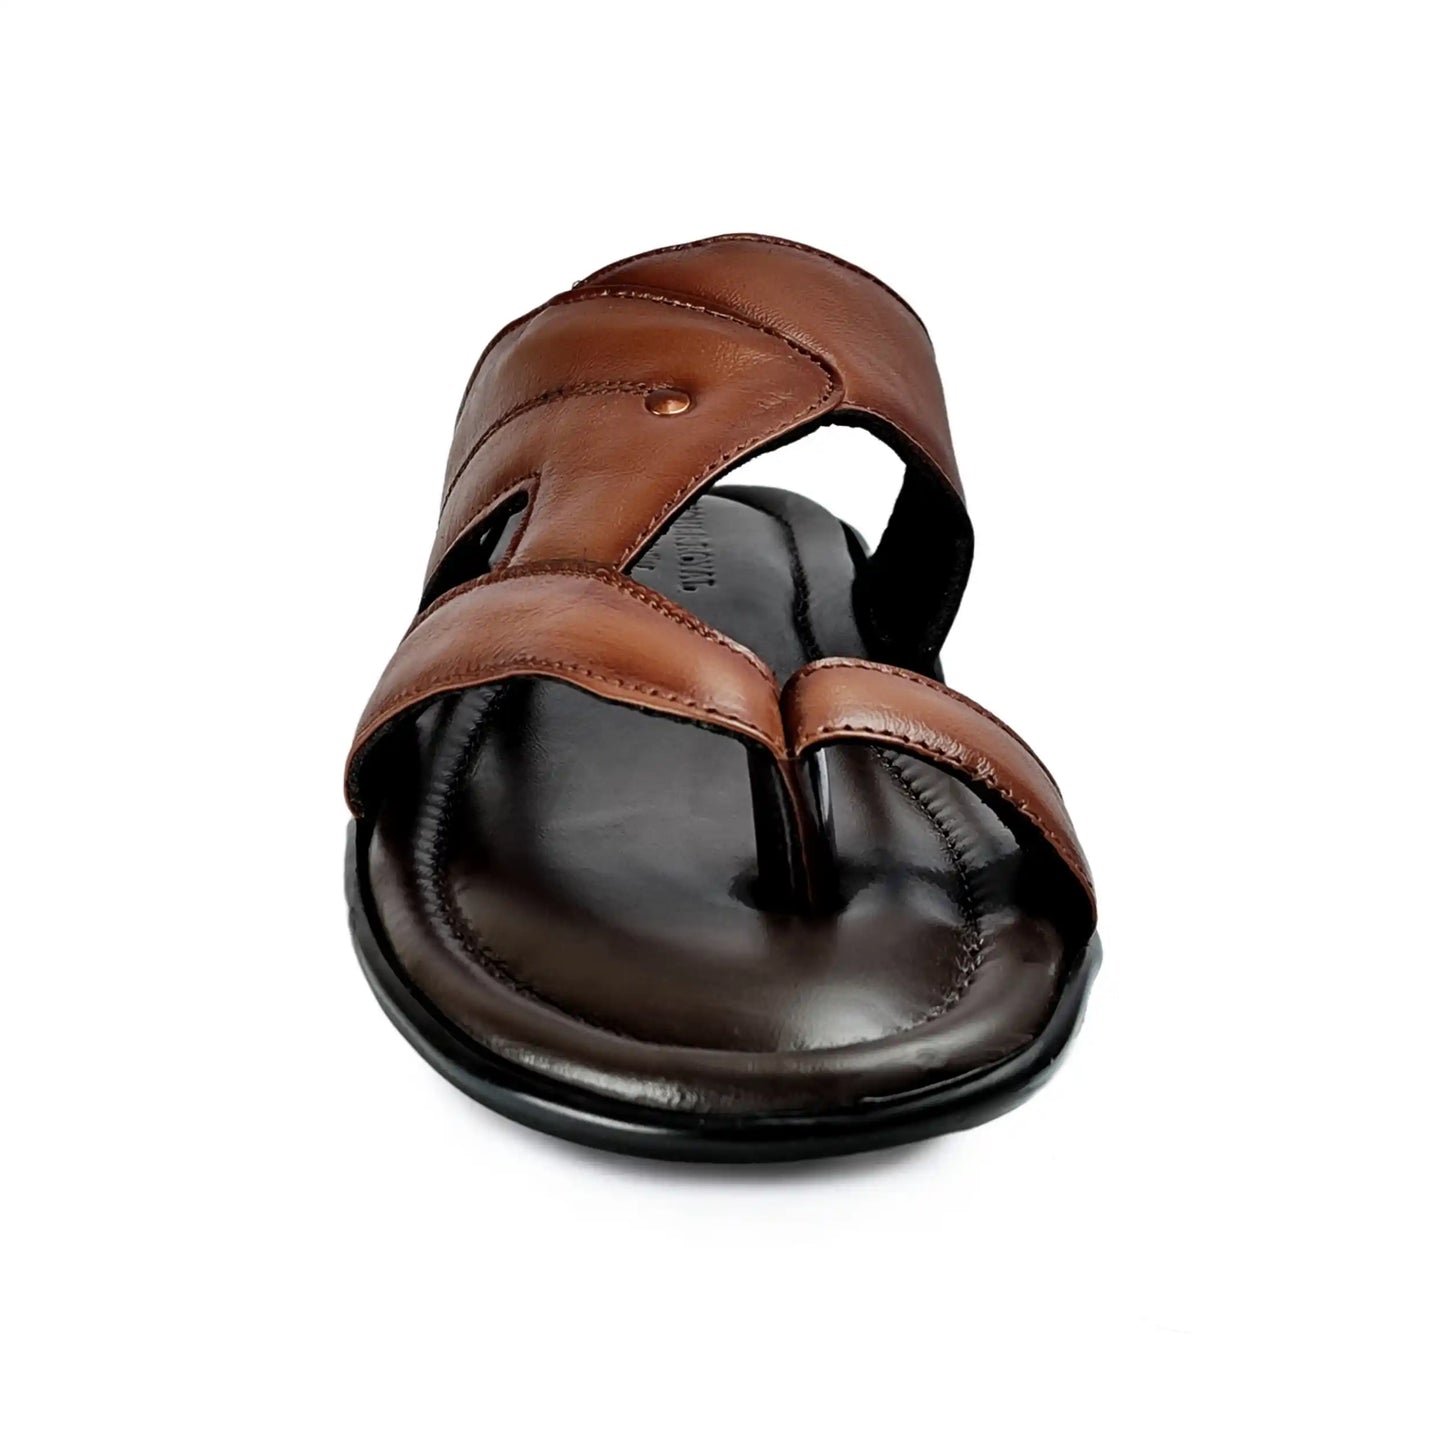 Slider Slippers for Men Genuine Leather Sandals